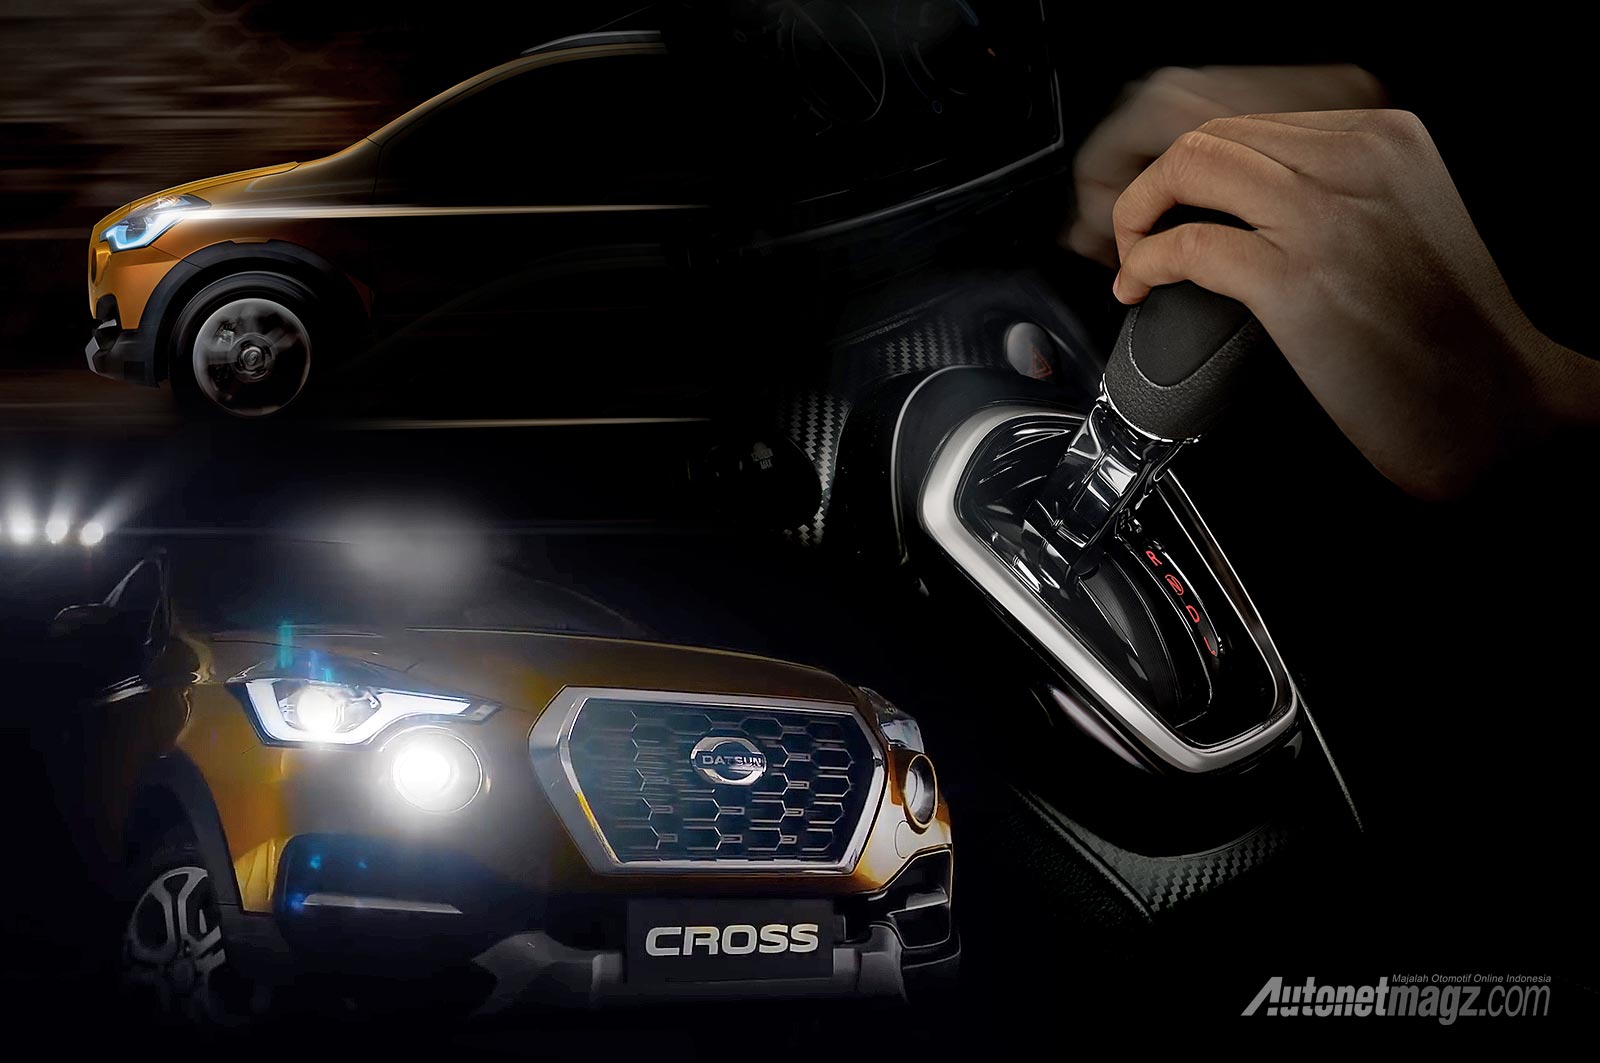 Harga-Datsun-GO-Cross-2018 AutonetMagz Review Mobil 